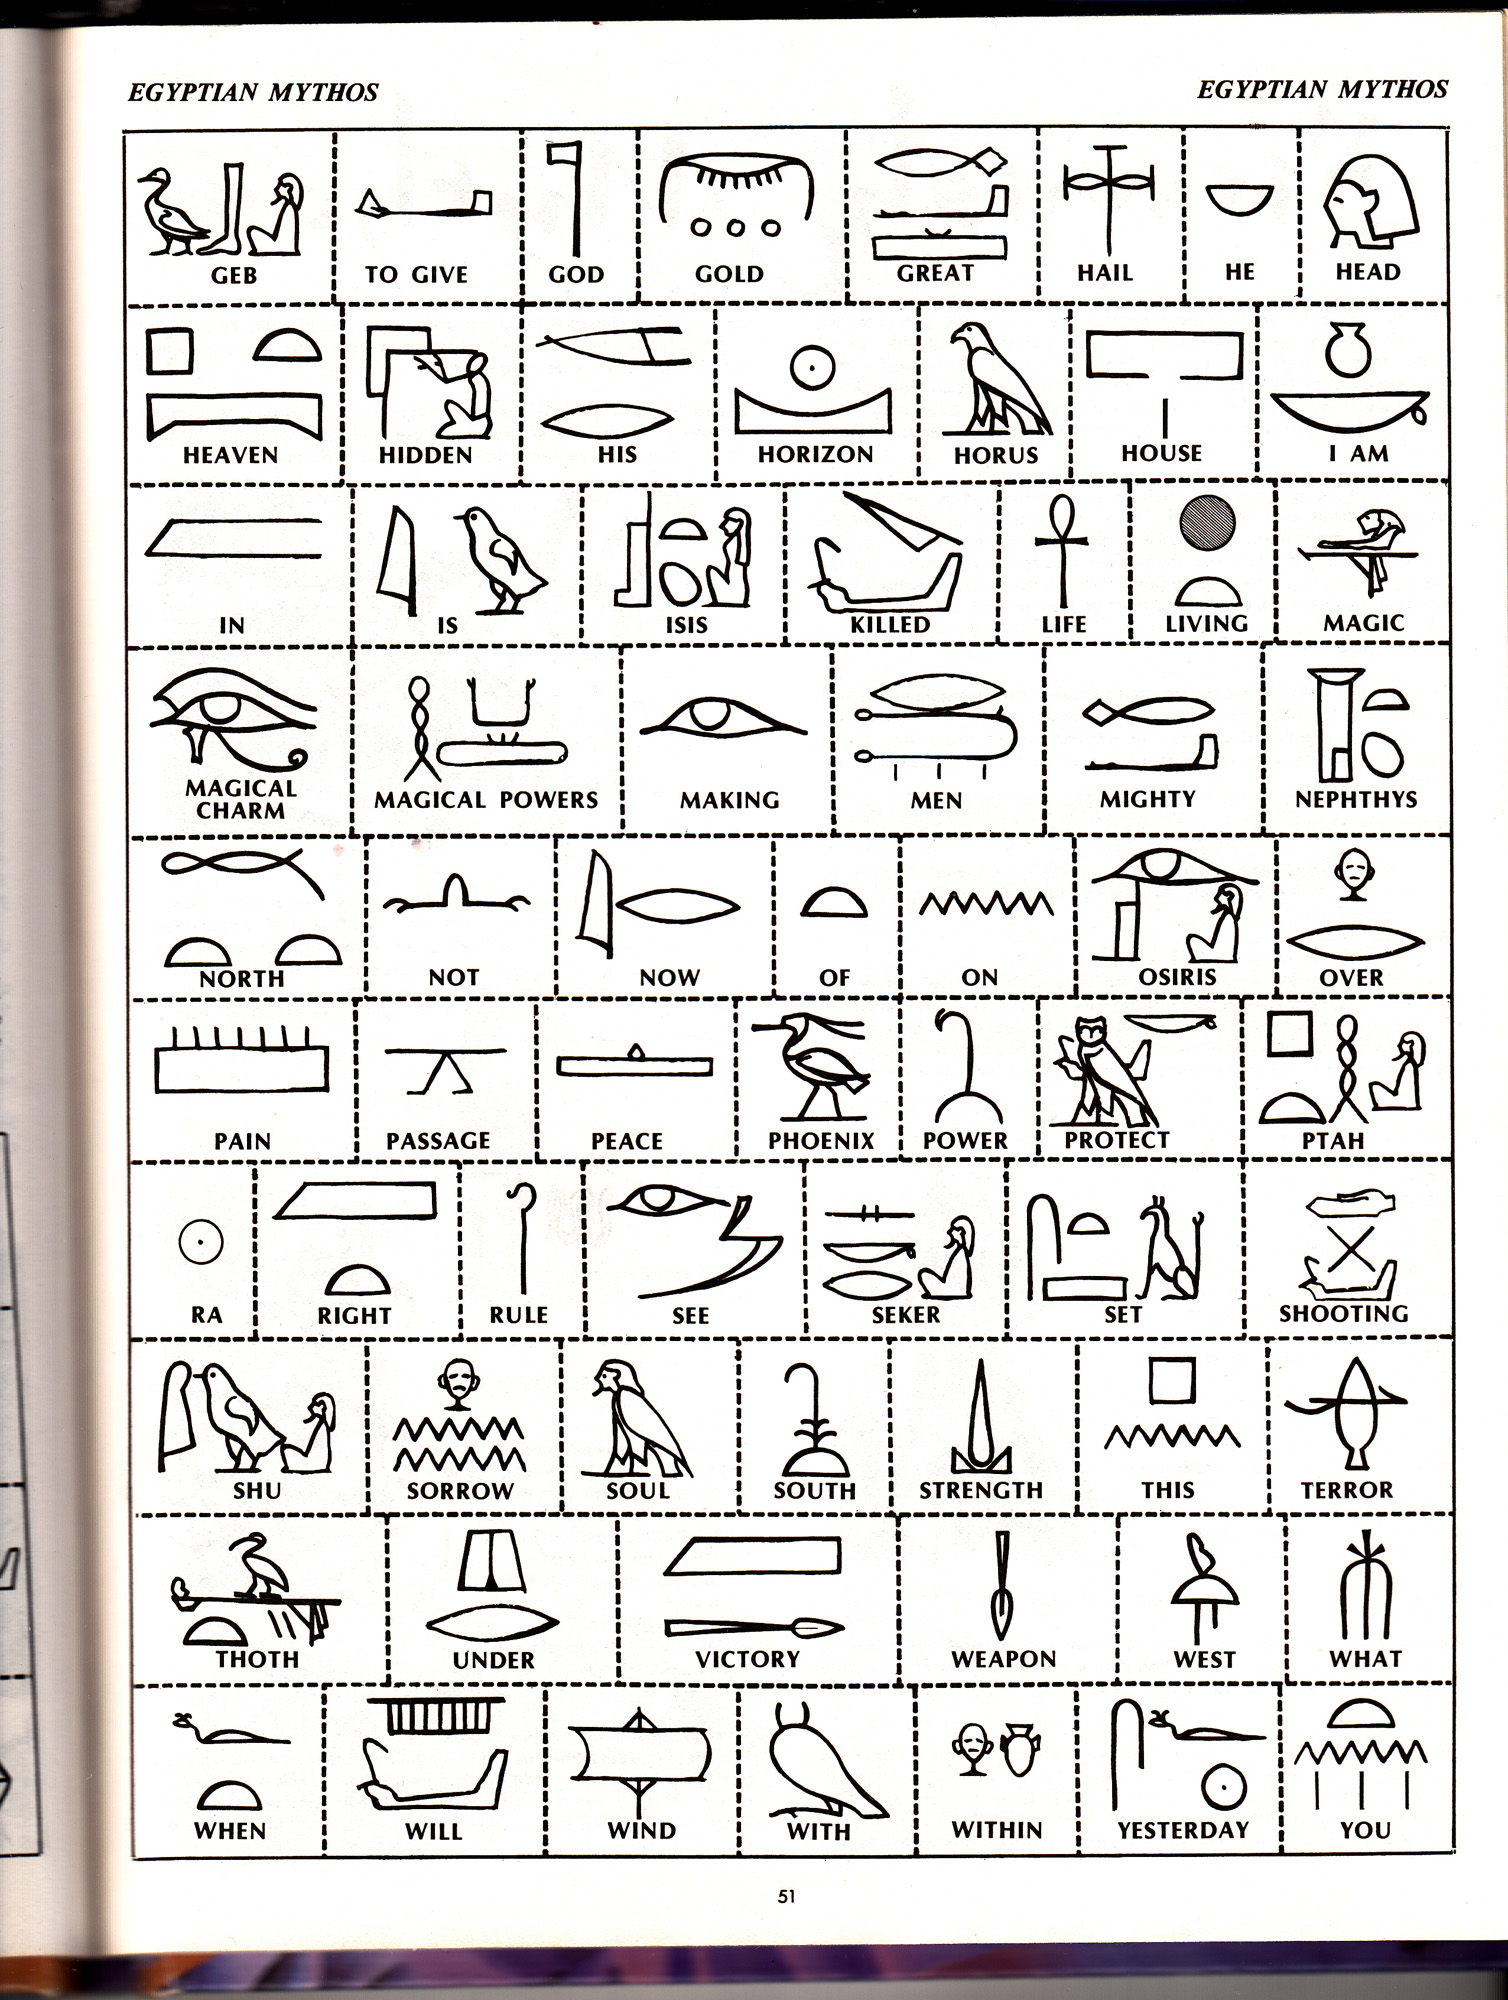 hierglyphs